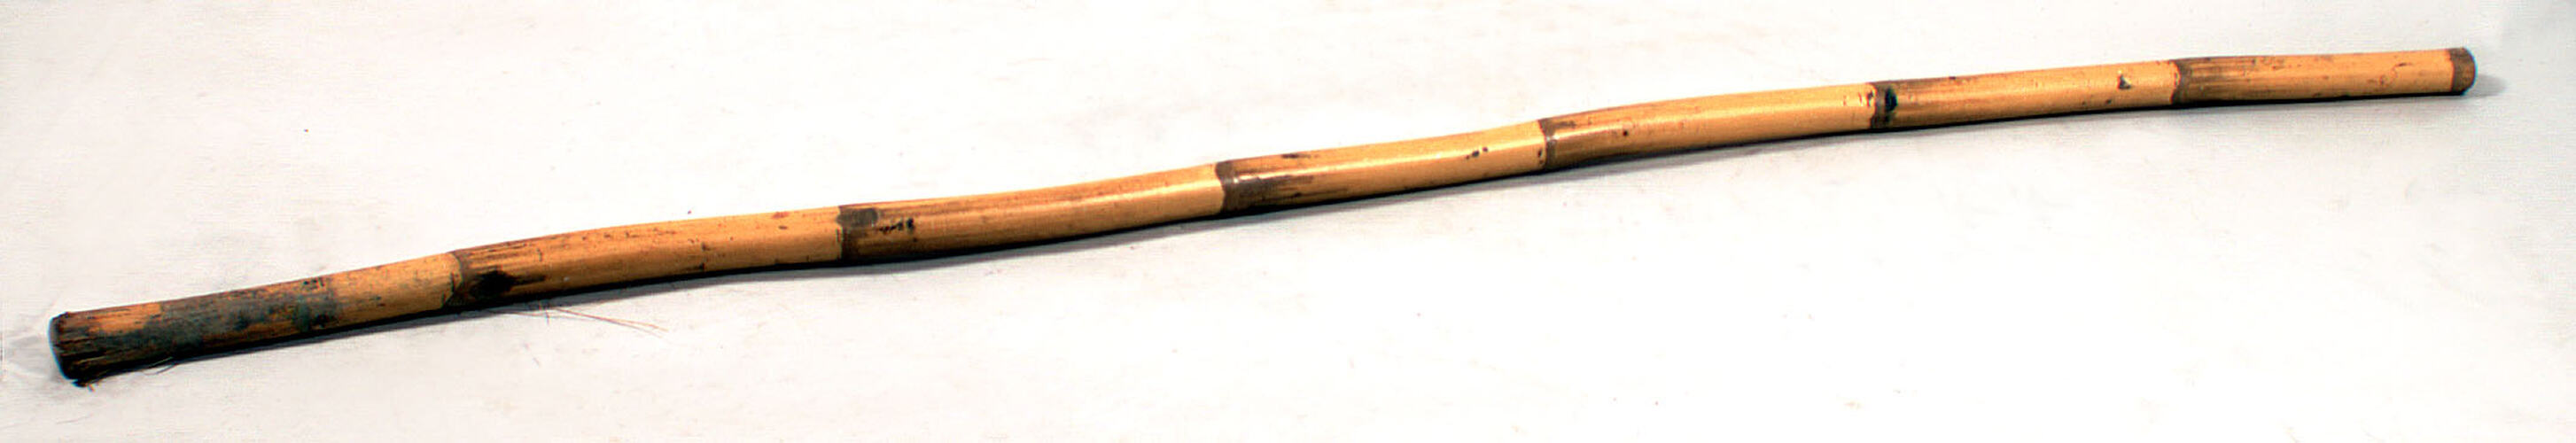 Yardman's Stick